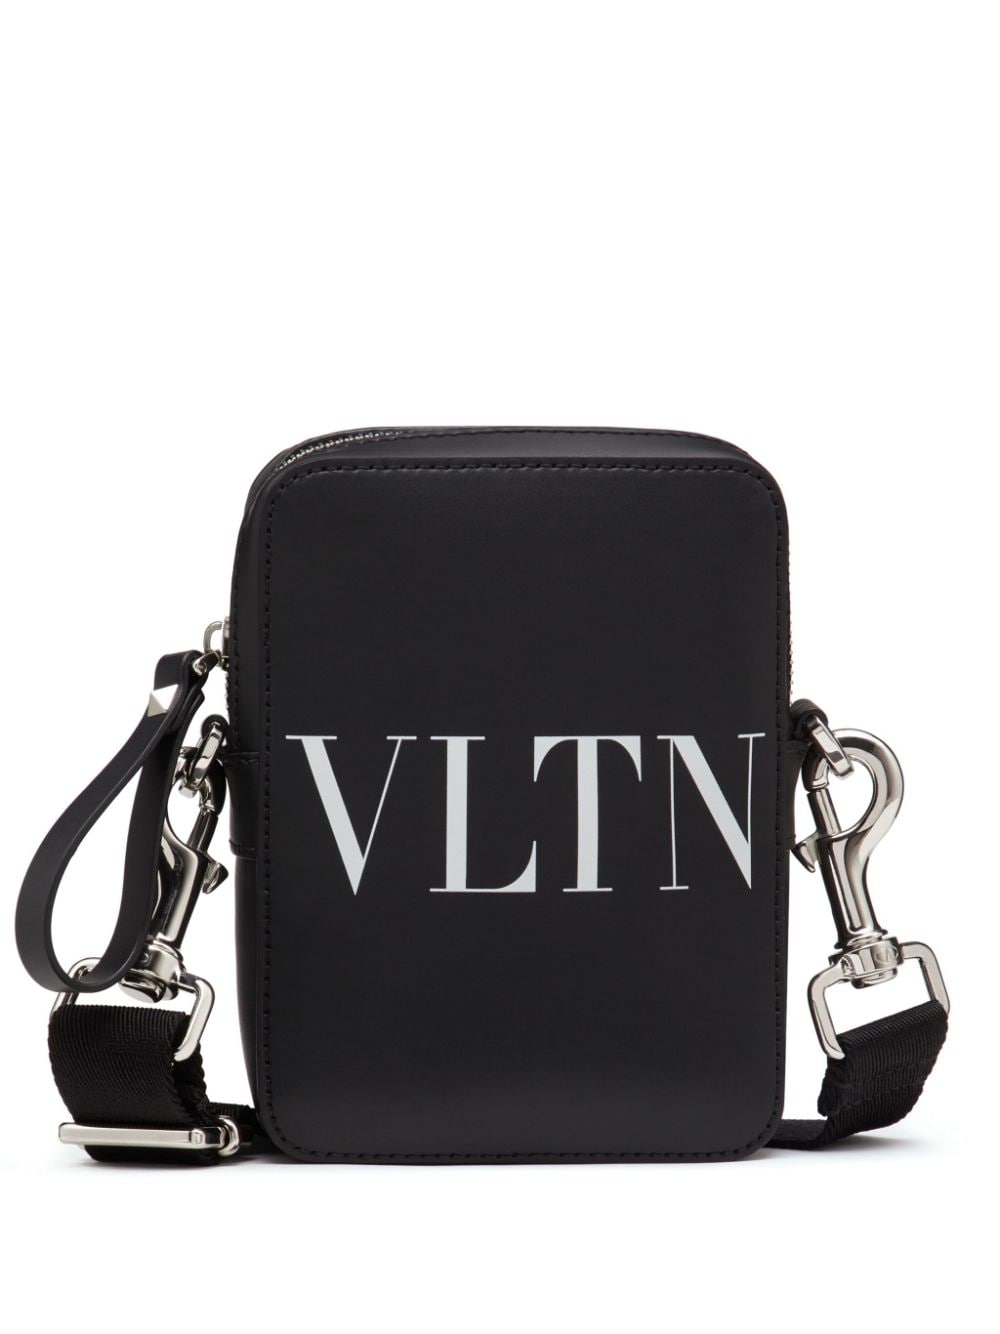 Valentino Garavani Small Vltn Messenger Bag In Black/white